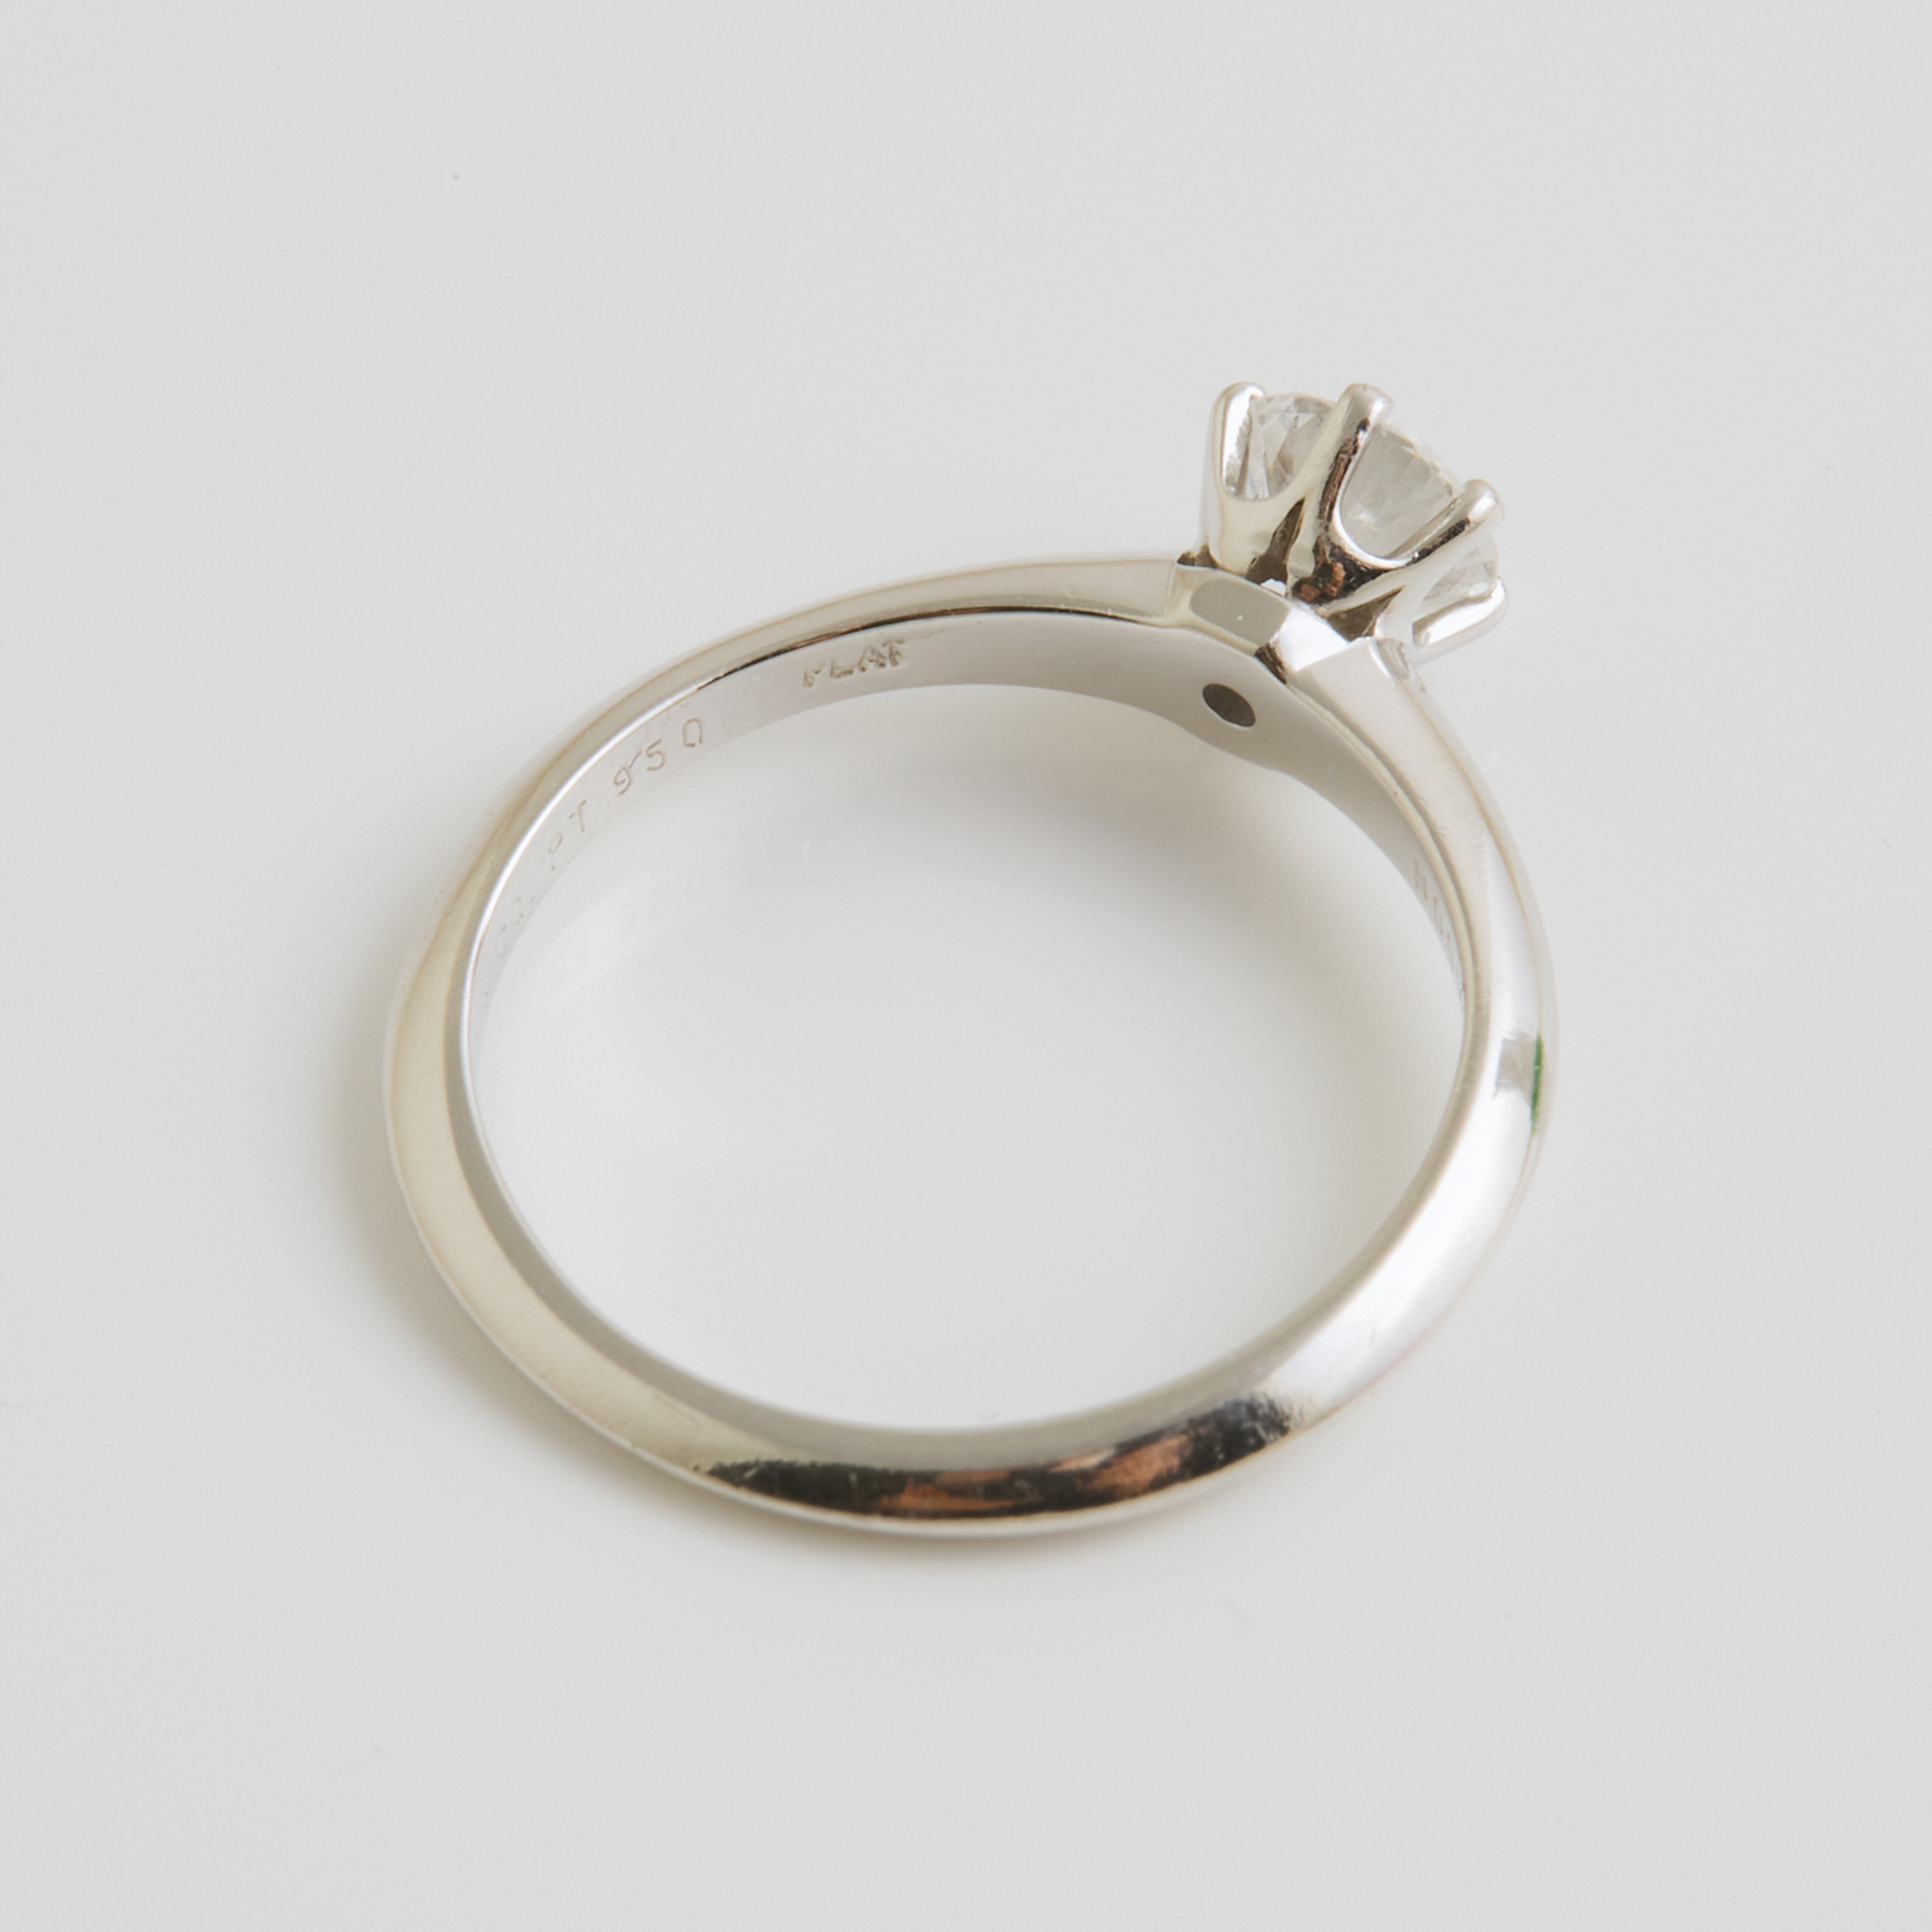 Tiffany & Co. Platinum Solitaire Ring